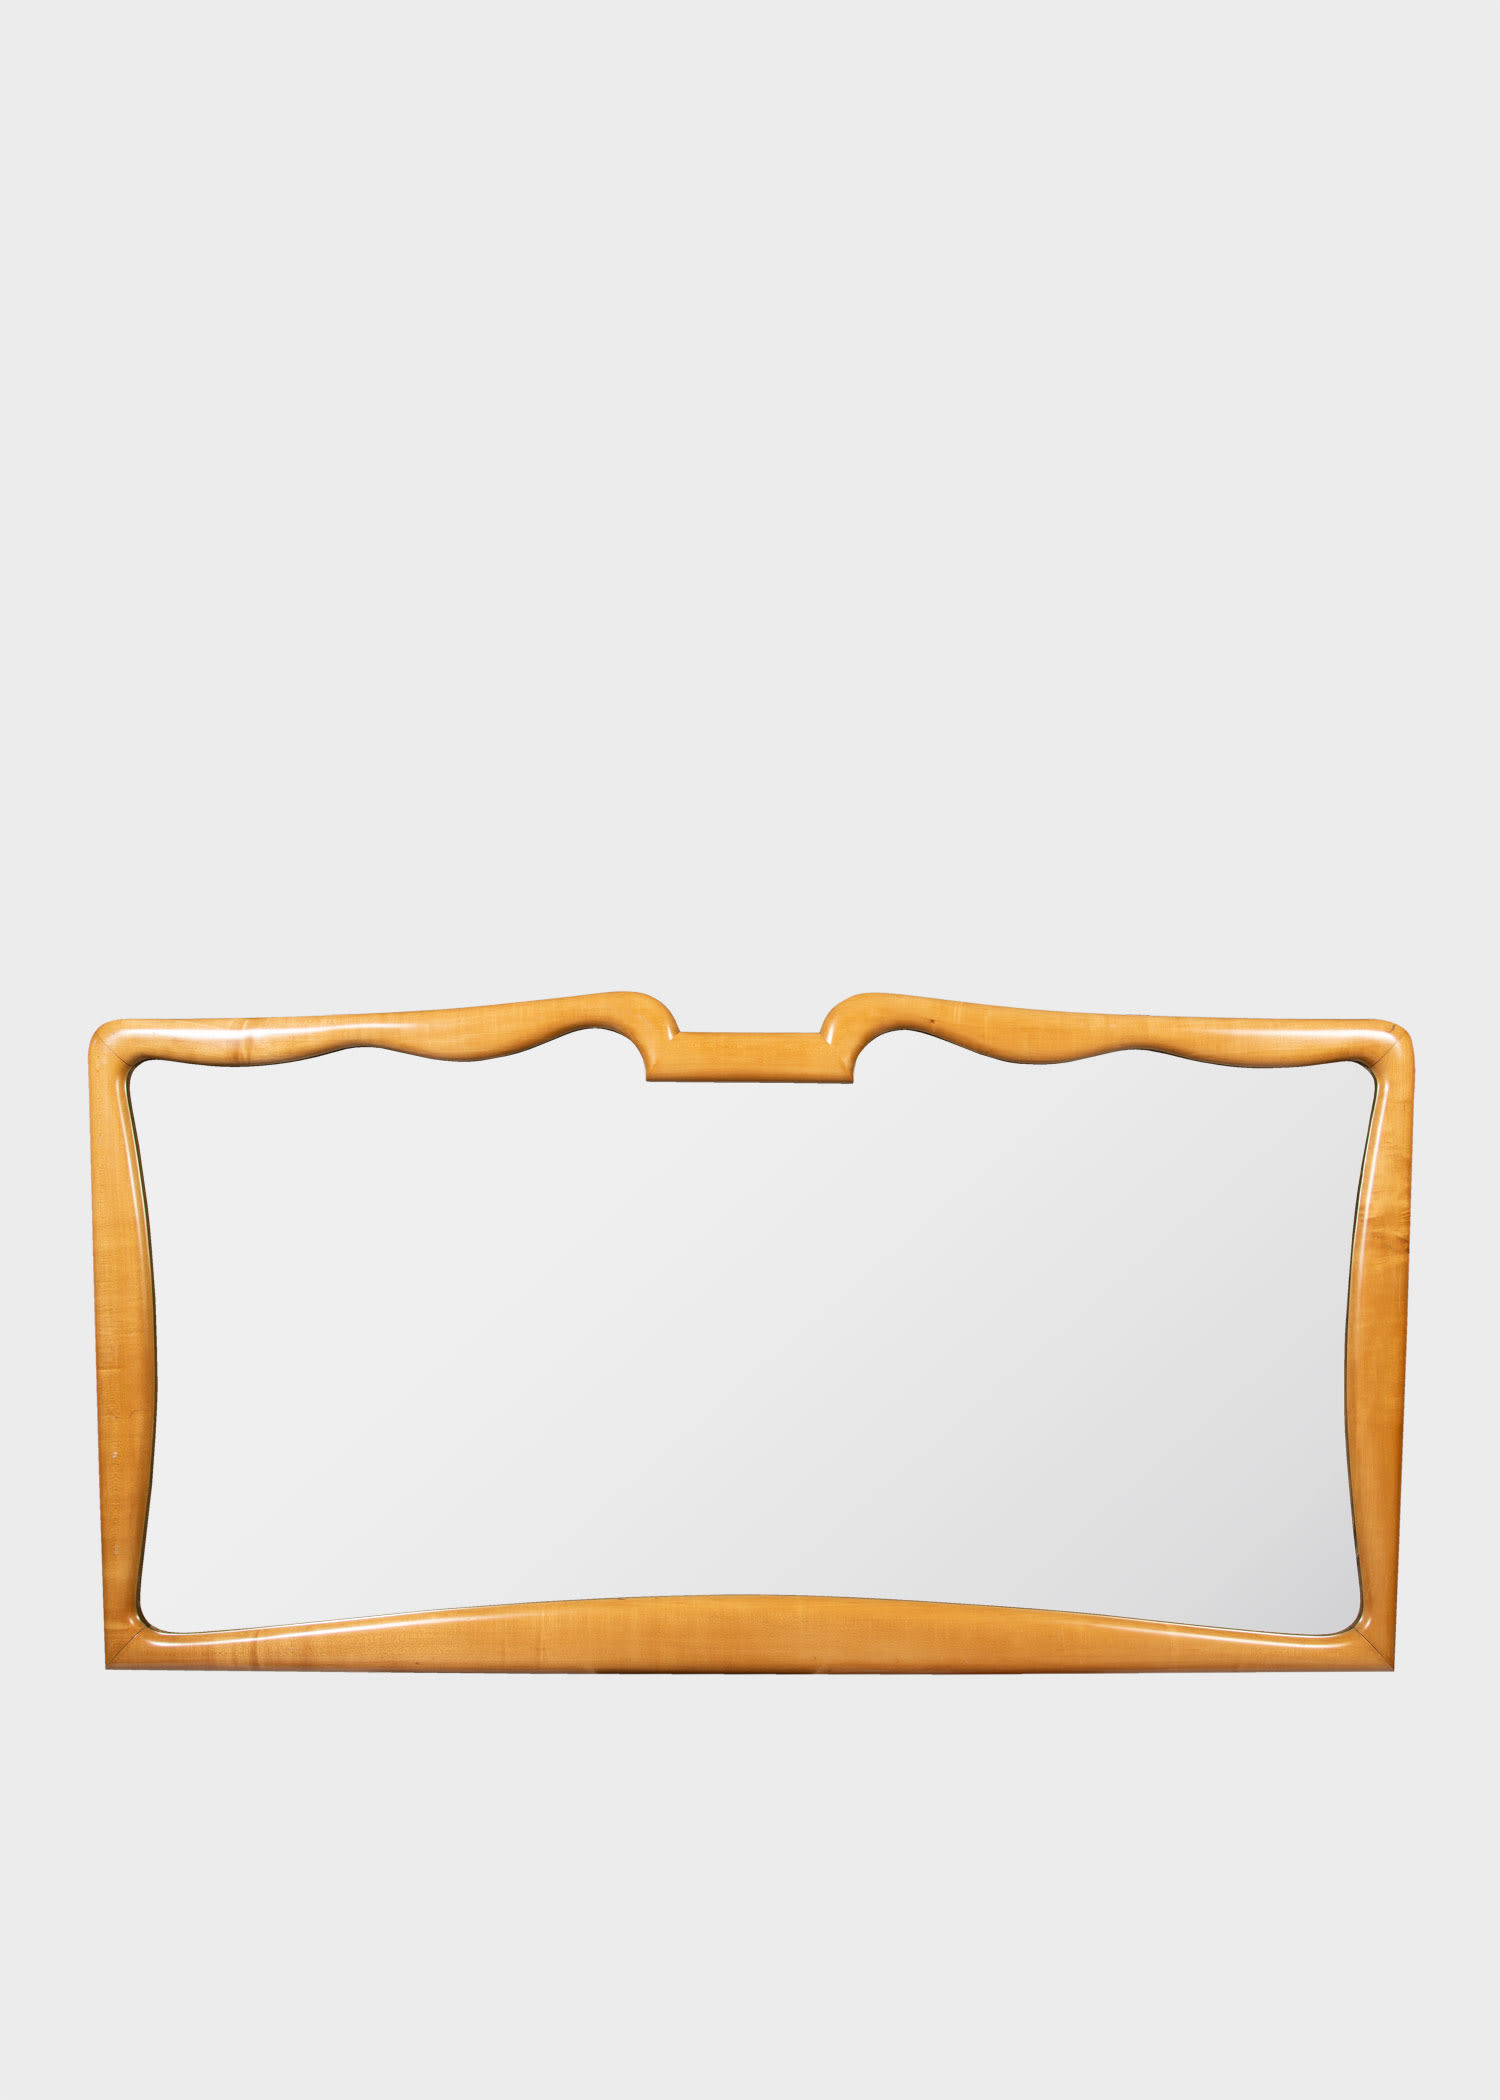 Italian Mirror With Carved Pine Burl Veneer Frame 1950s Paul Smith Europe